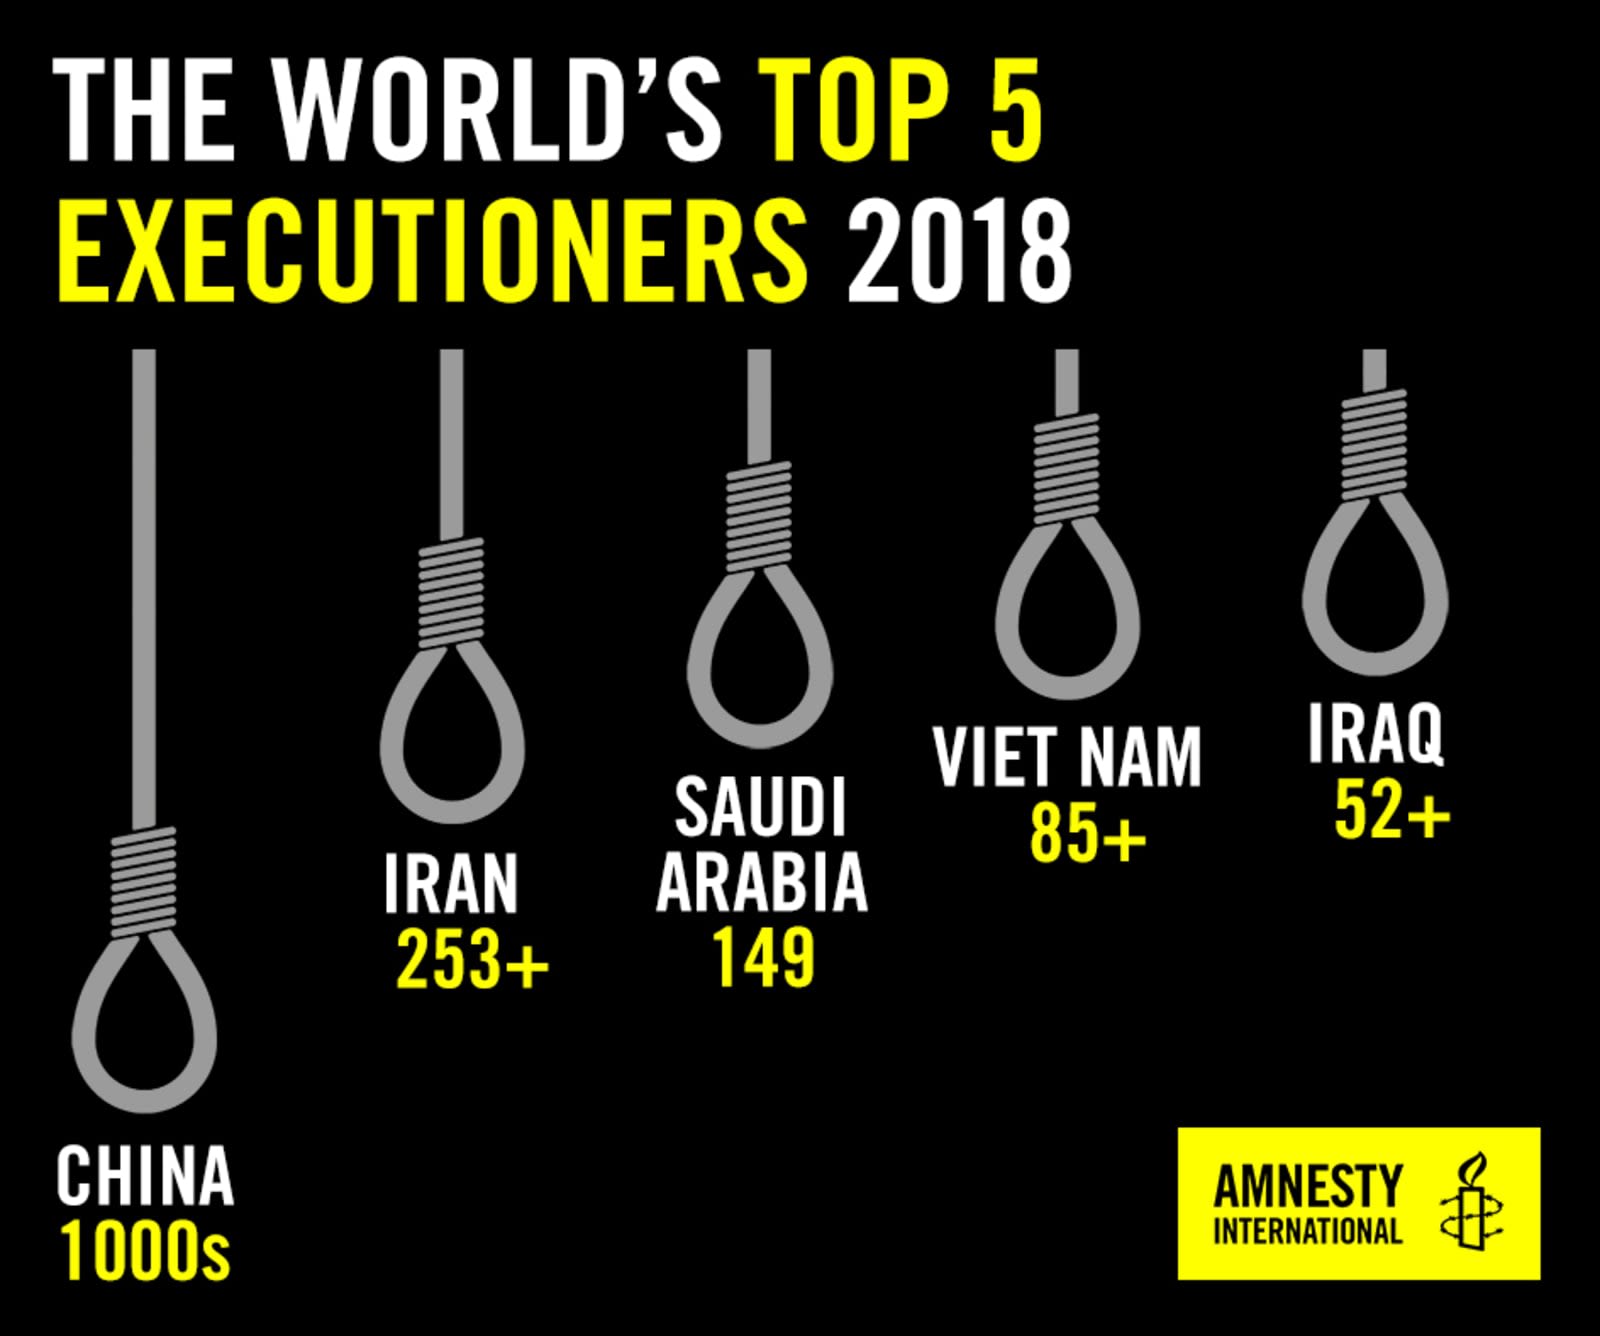 Image from Amnesty International